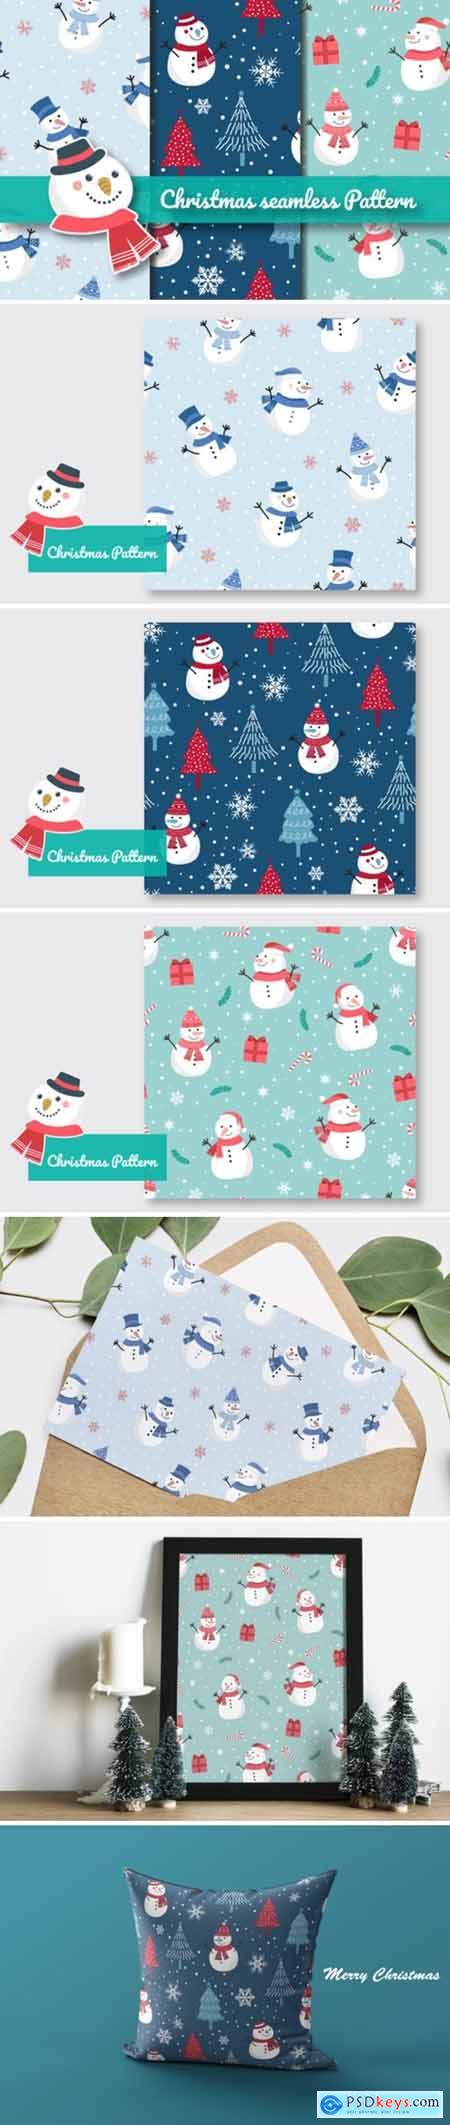 Christmas Cute Snowman Seamless Pattern 5731716